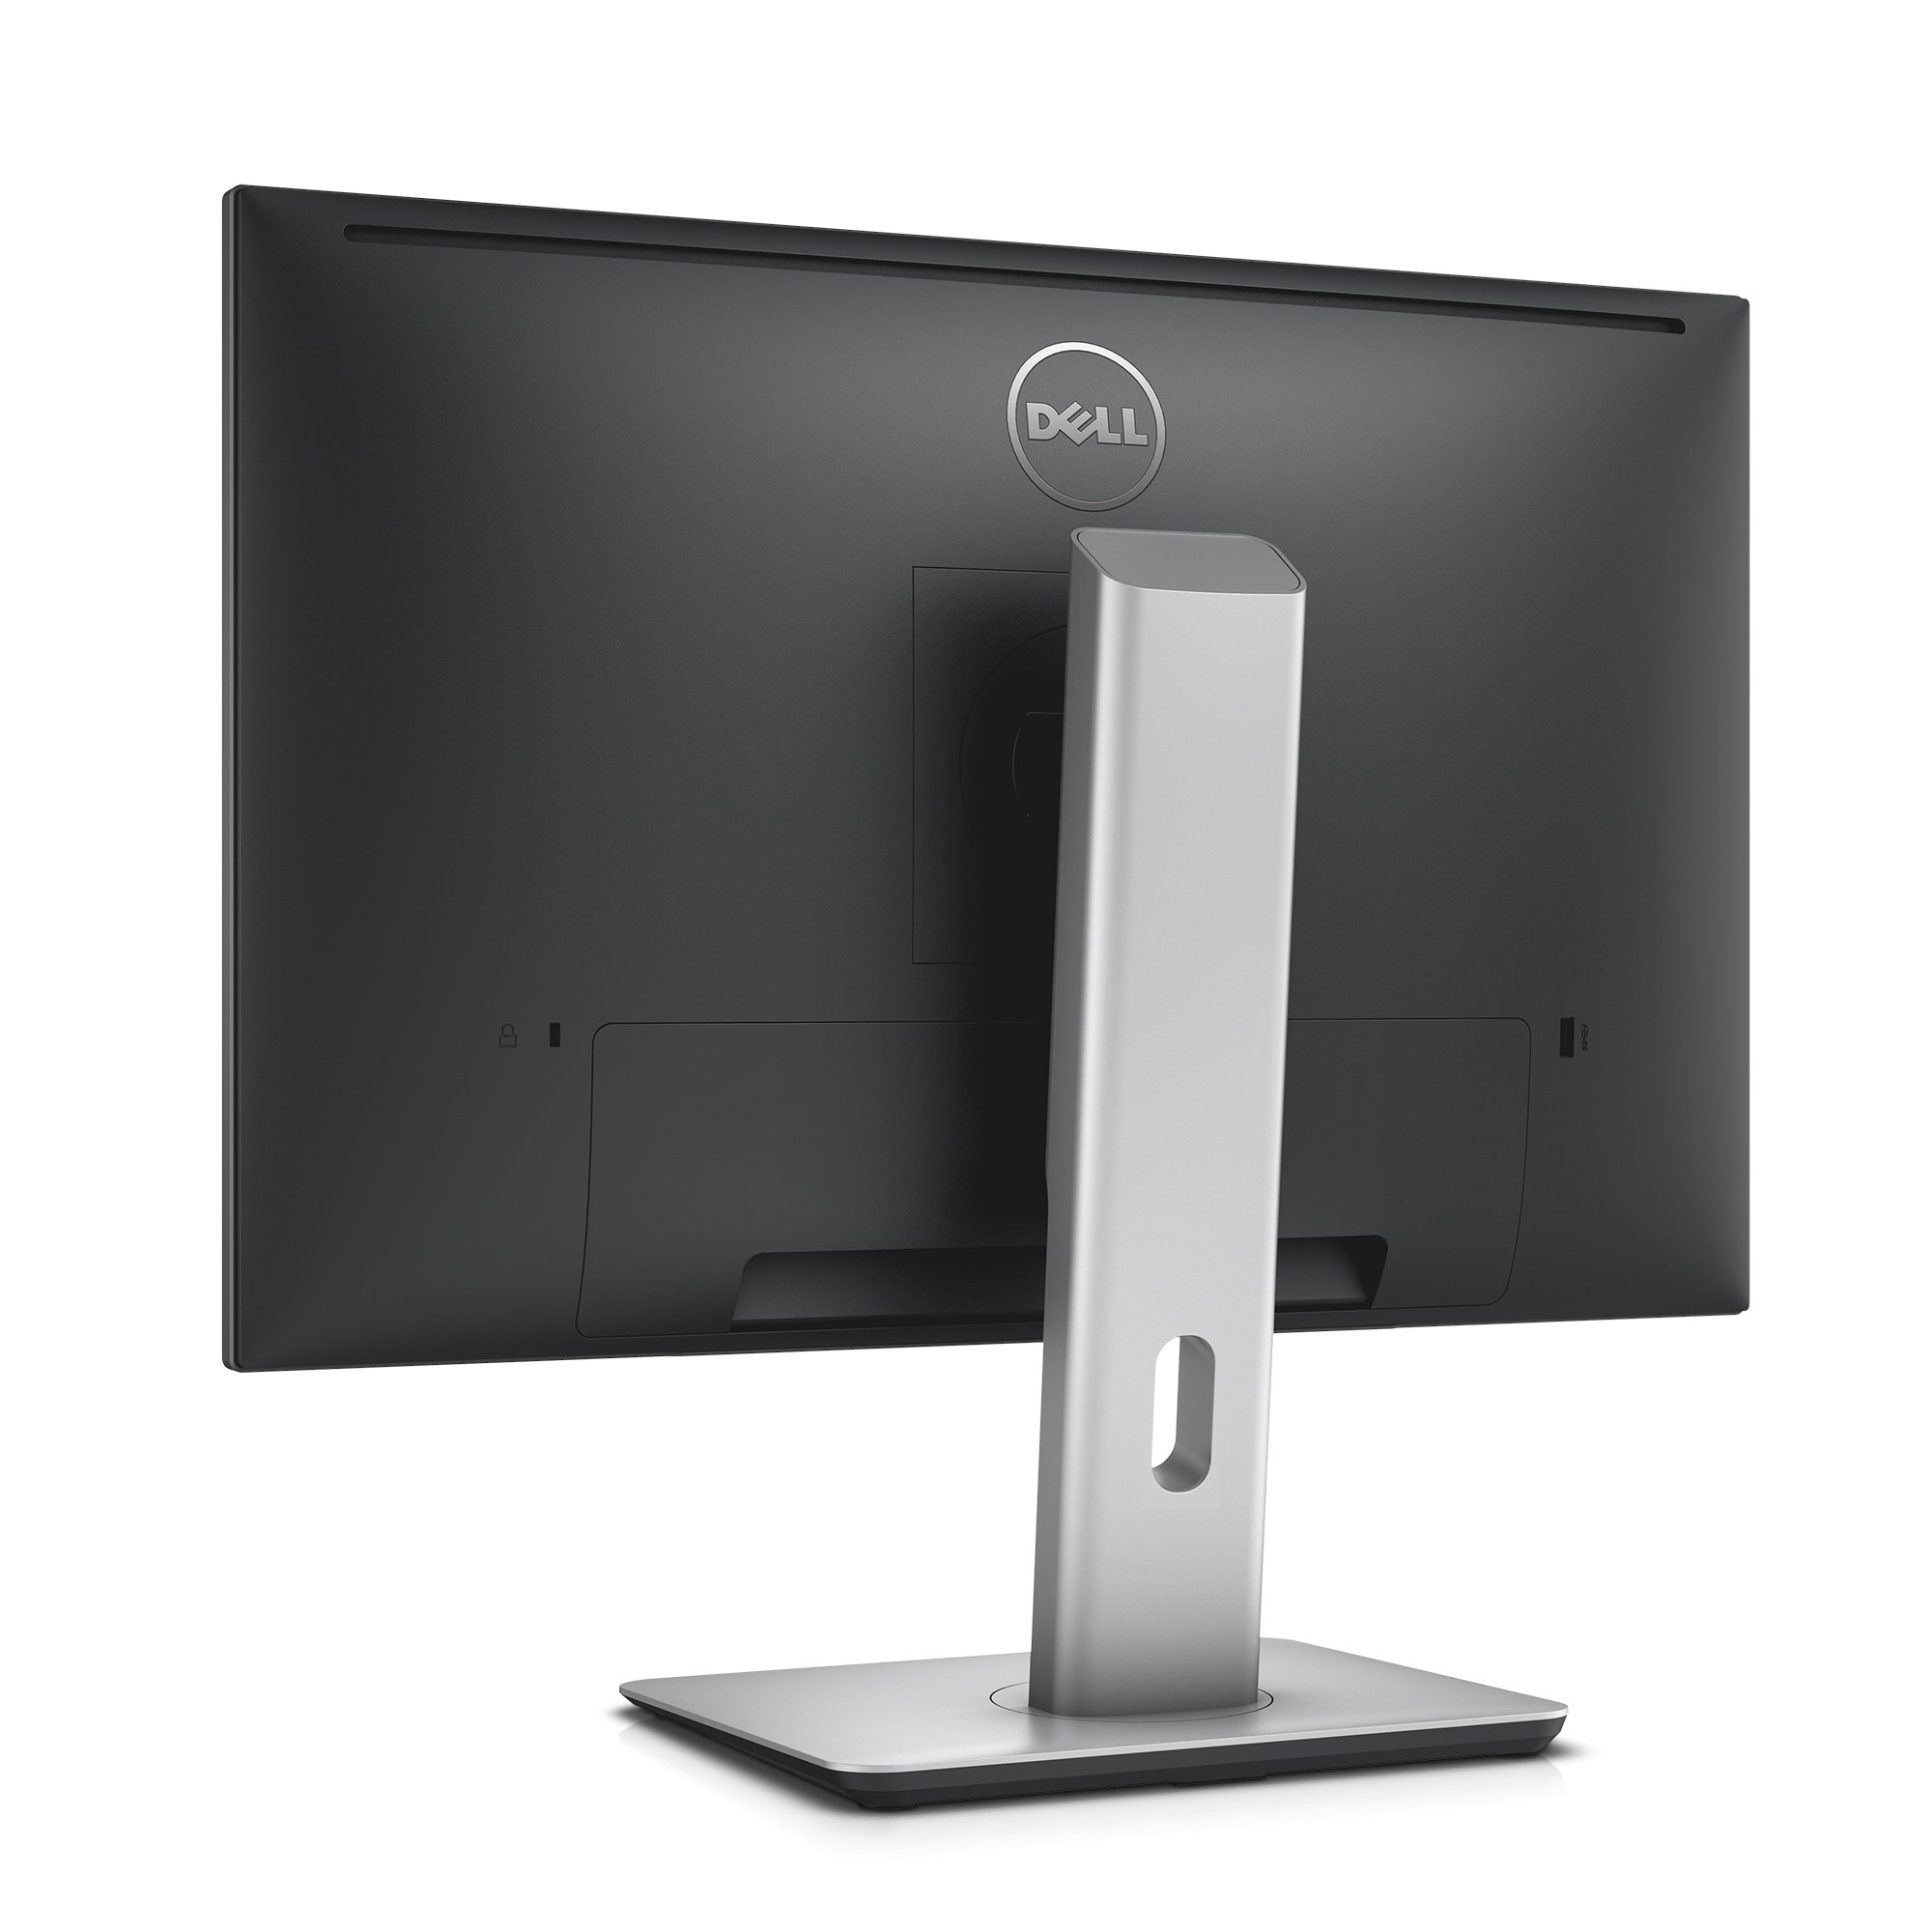 Dell Computer Ultrasharp U2415 24.0-Inch FHD 1080p Screen LED Monitor, Black